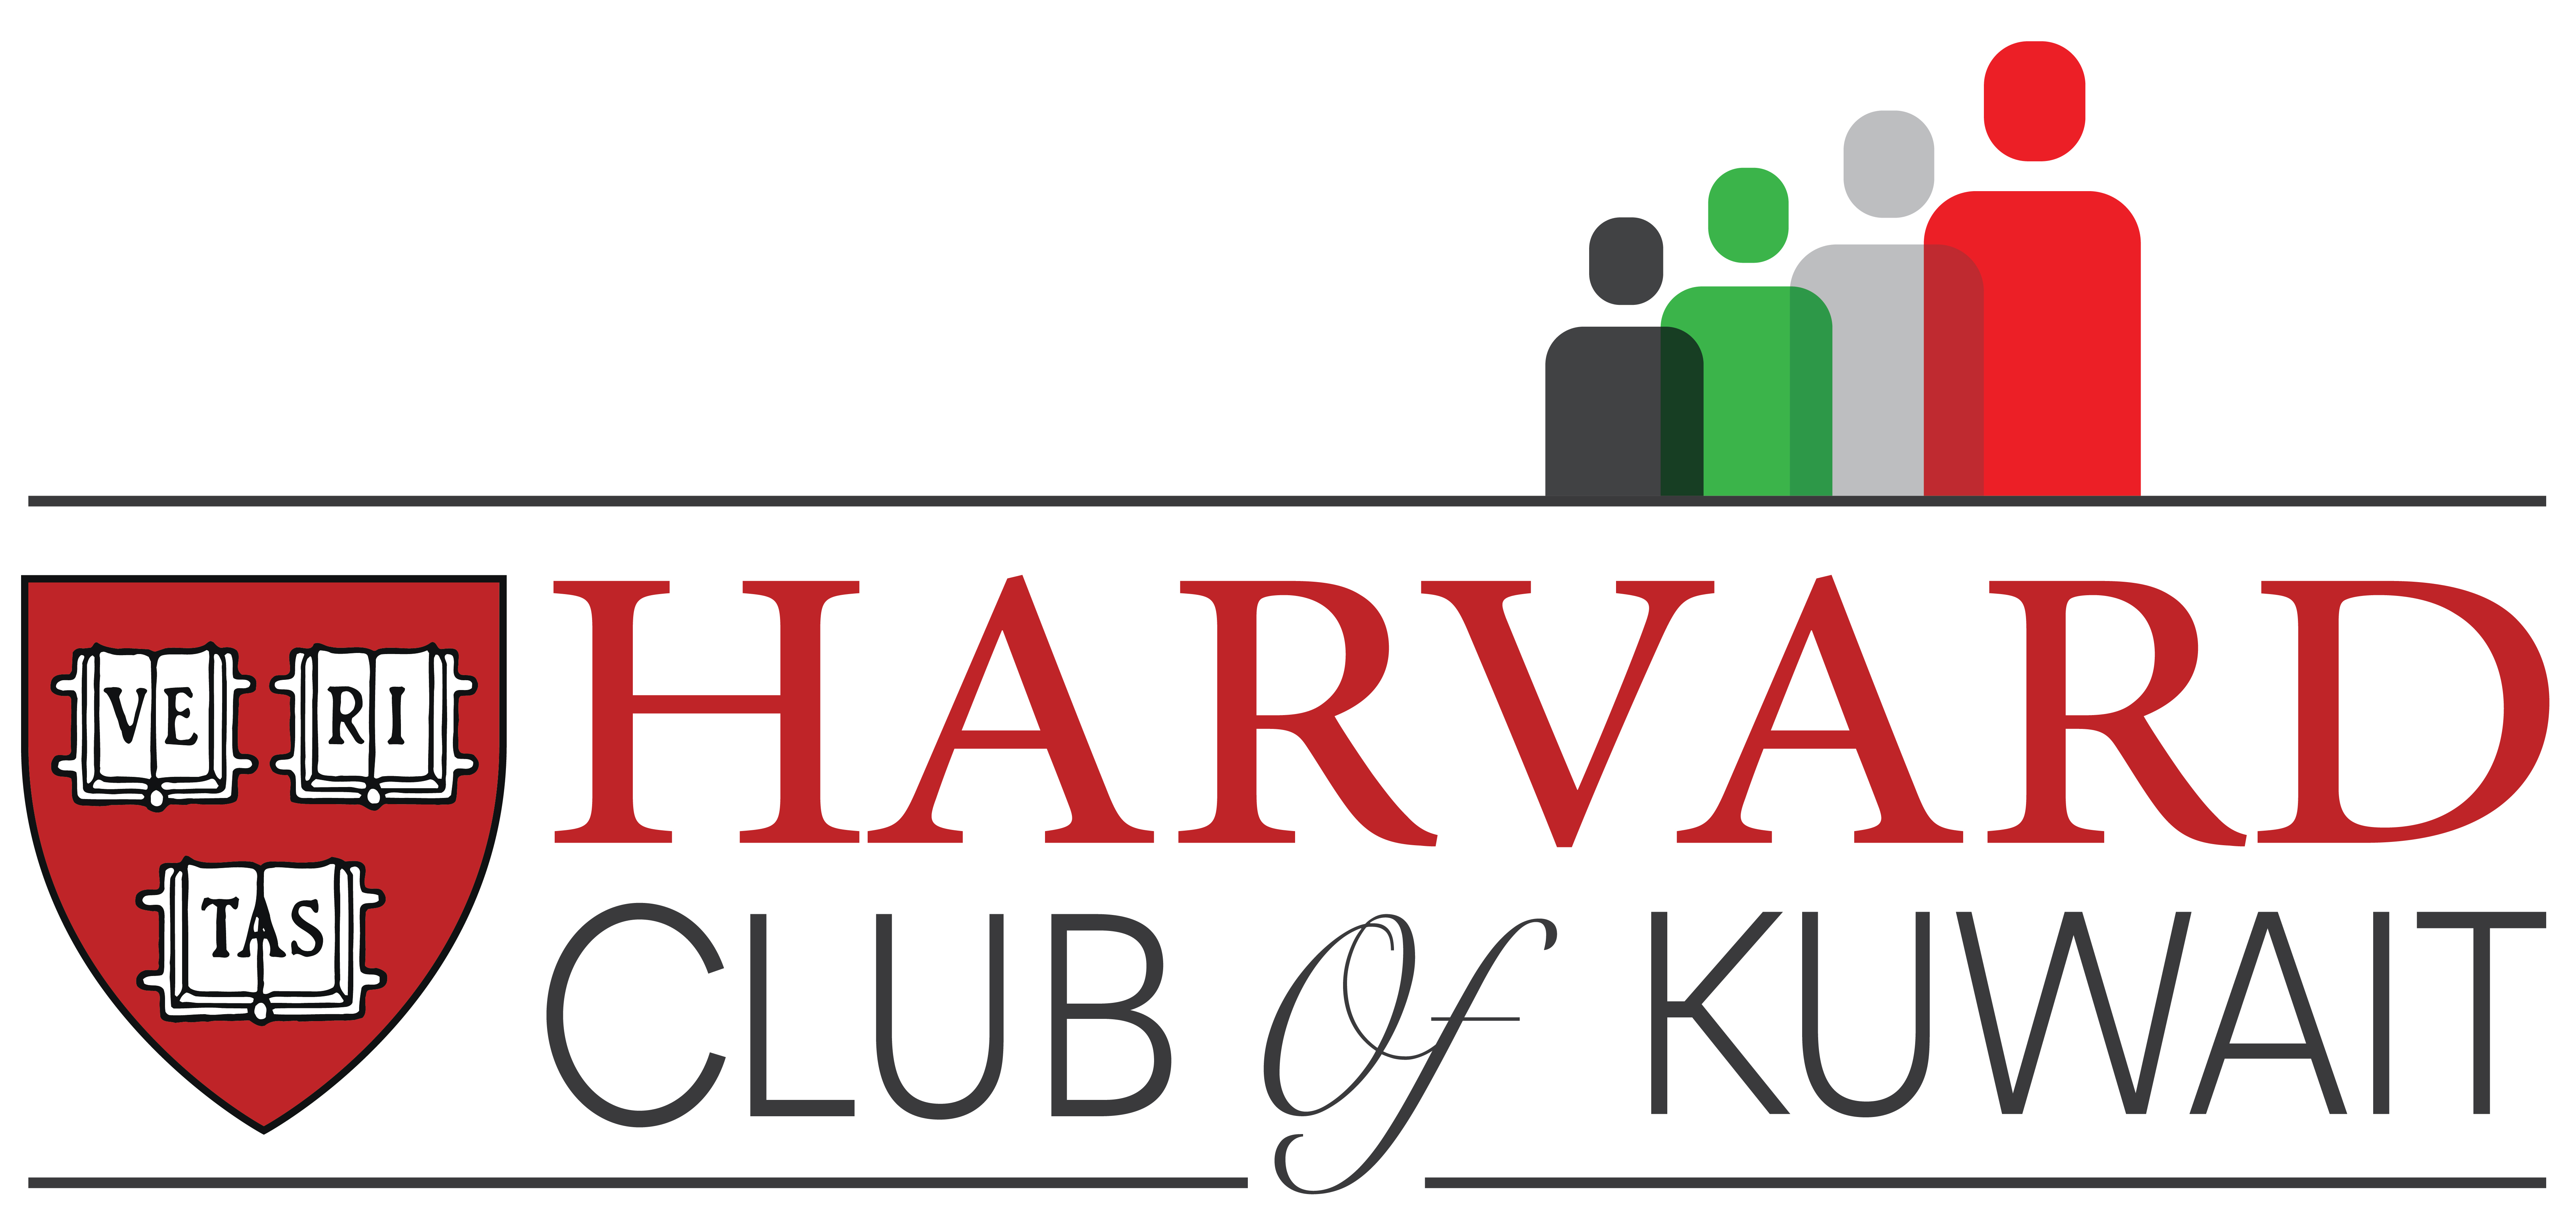 Harvard Club of Kuwait Logo